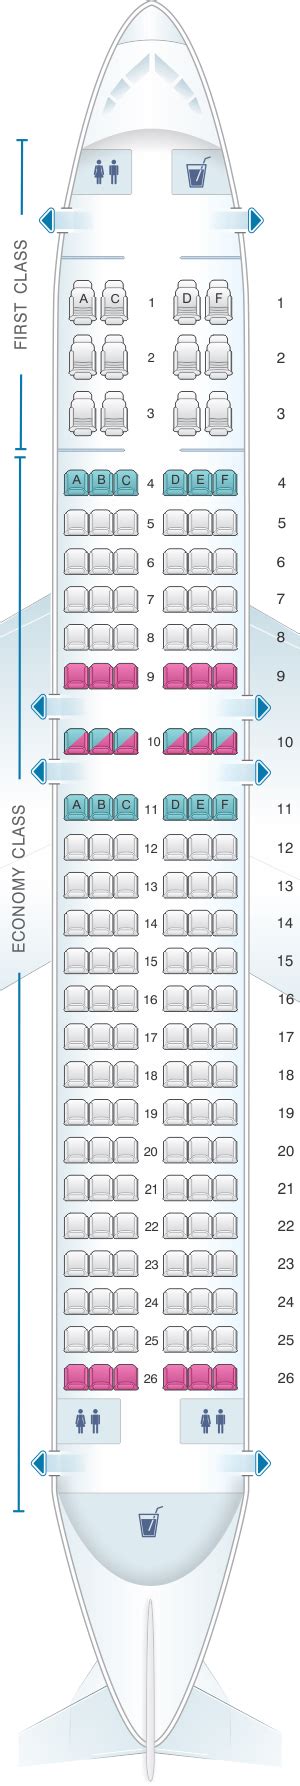 Plan De Cabine American Airlines Airbus A320 Seatmaestrofr